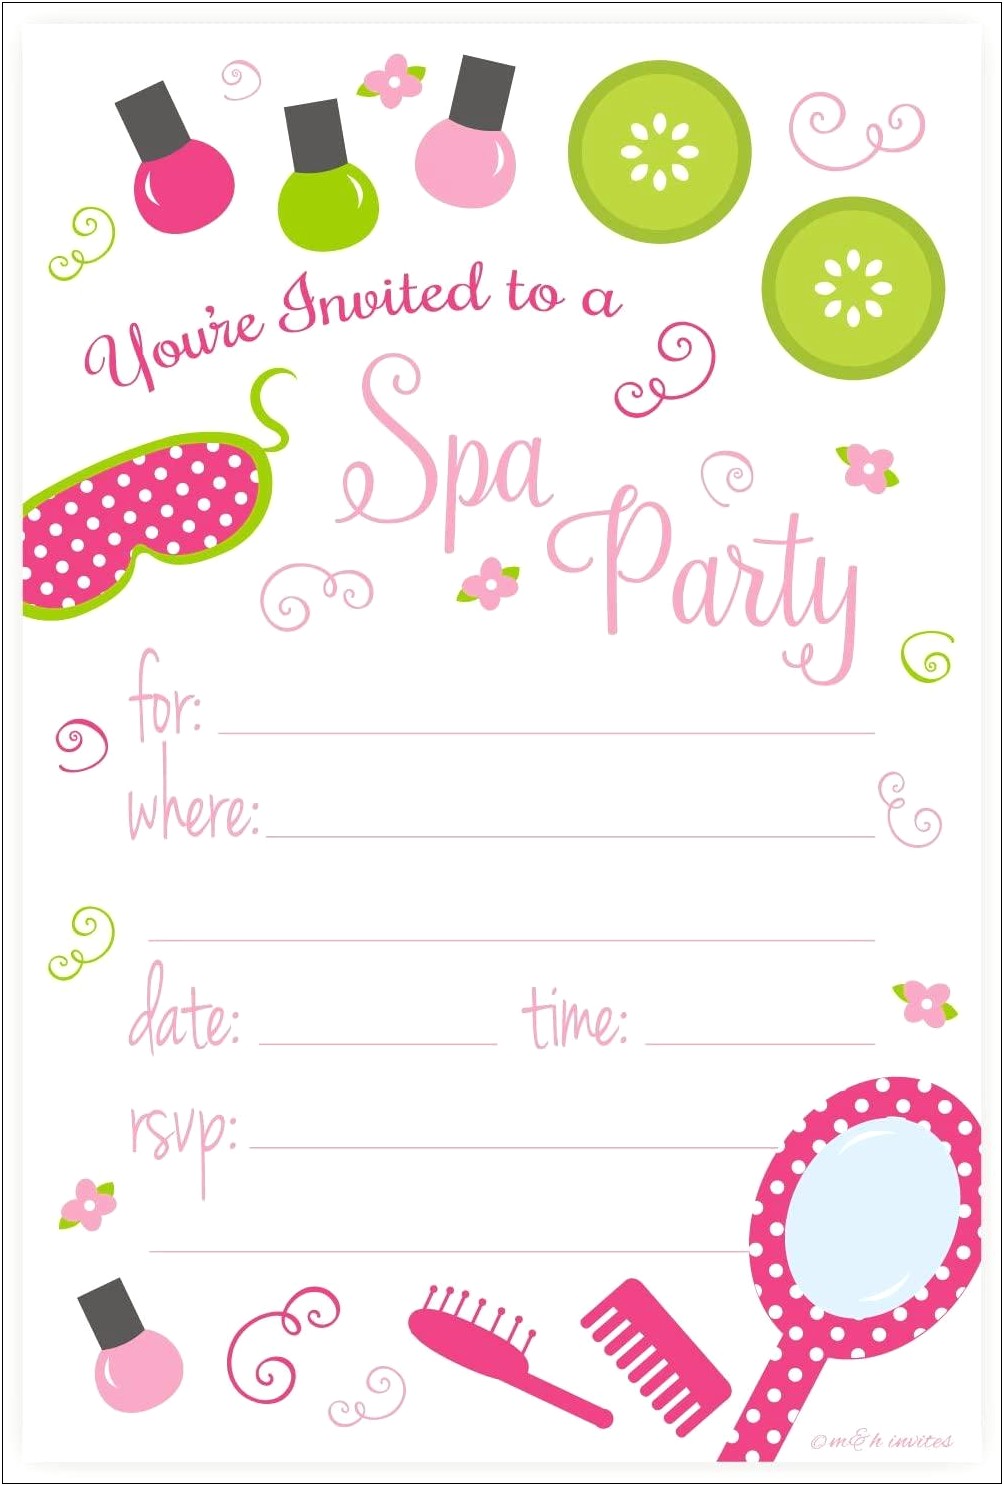 spy-birthday-party-invitation-template-free-resume-example-gallery